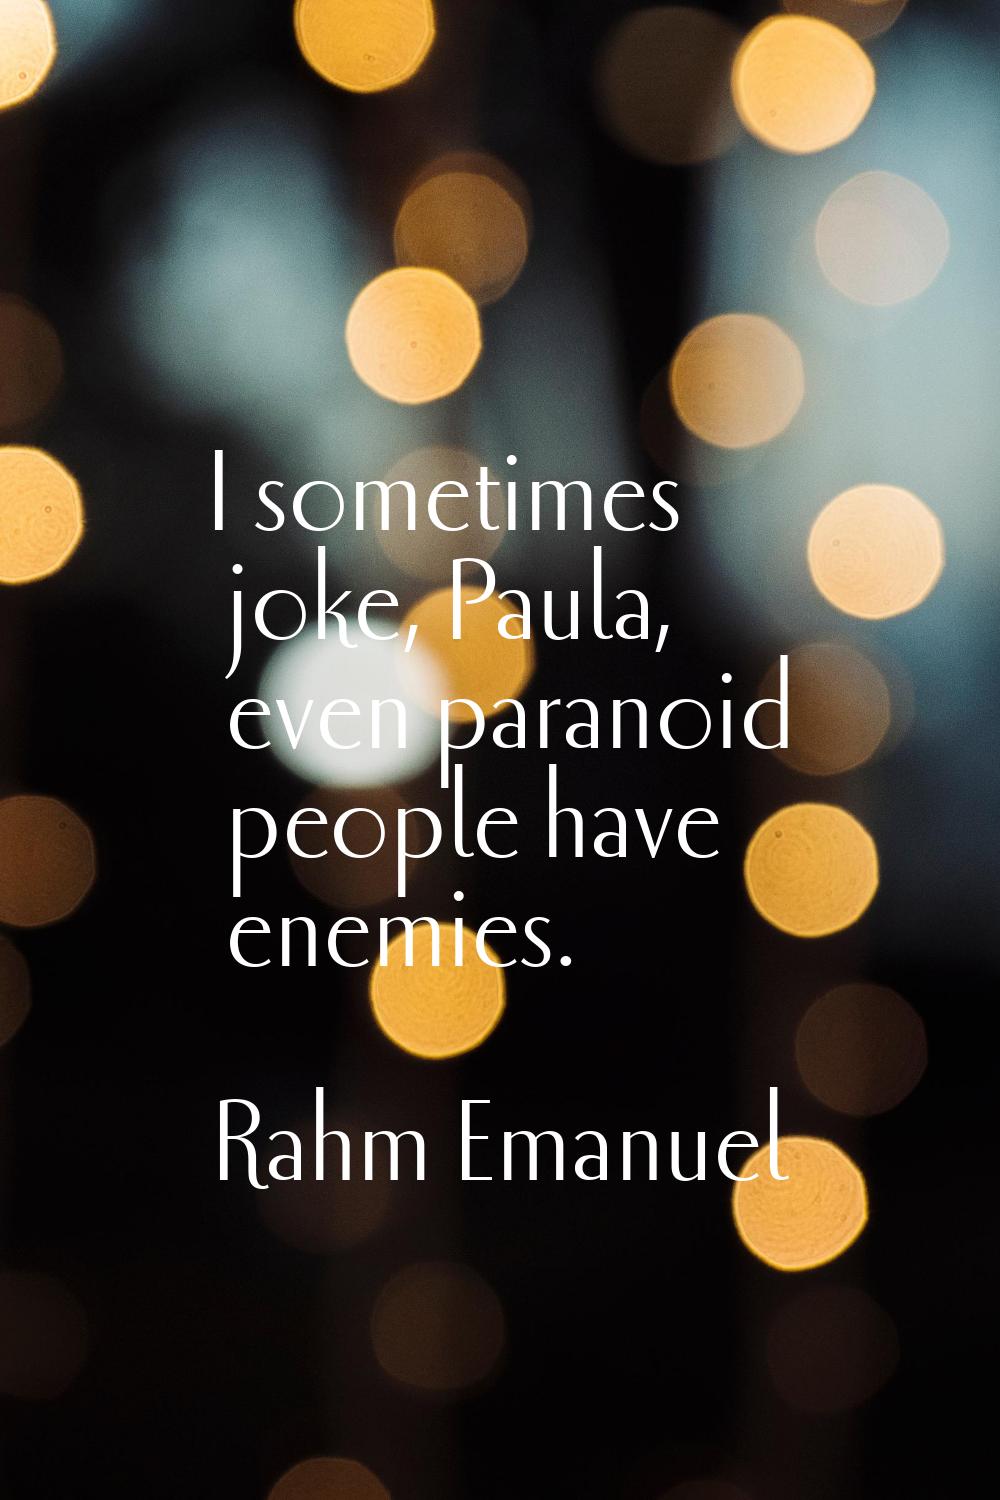 I sometimes joke, Paula, even paranoid people have enemies.